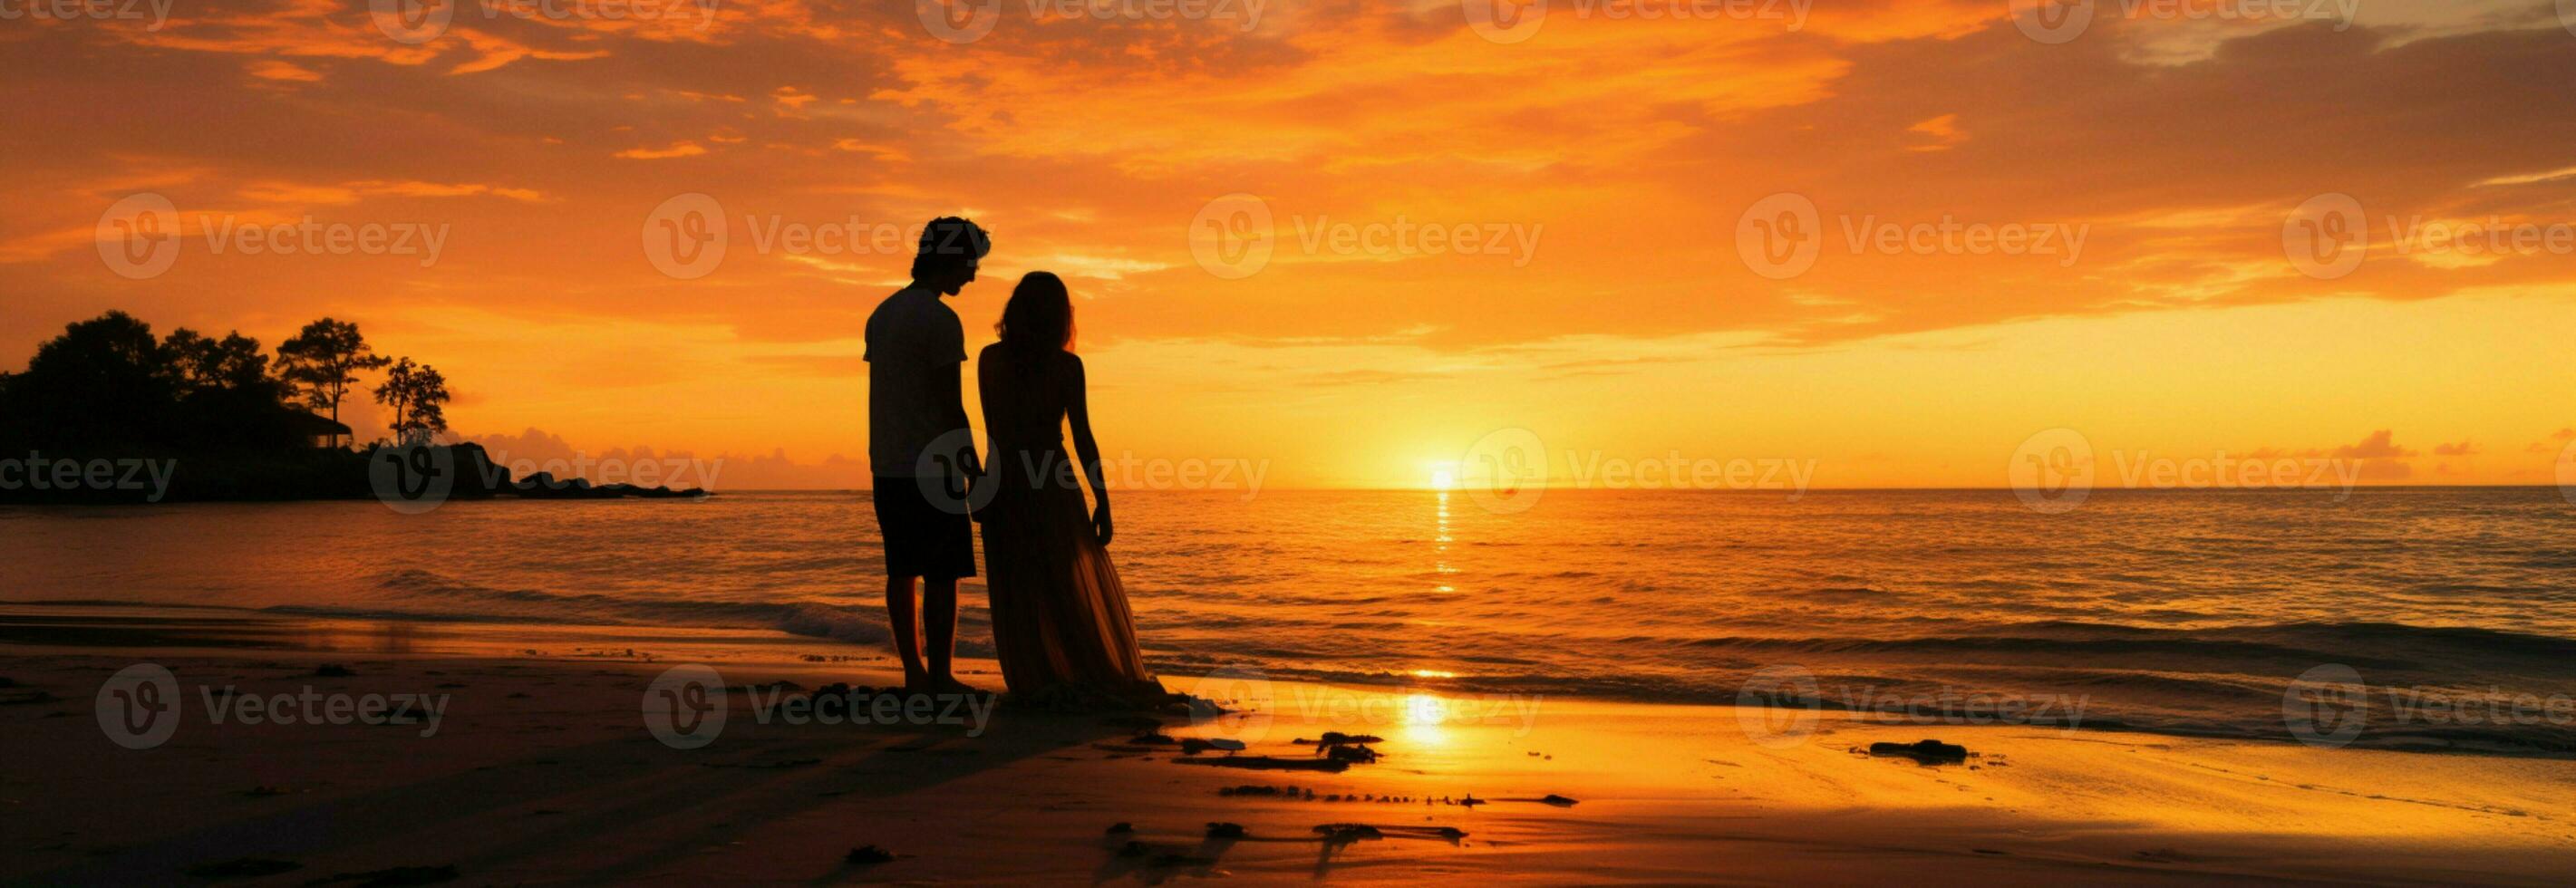 romantisch strand momenten paren silhouet, omarmen in de zonsondergangen warm omhelzing ai gegenereerd foto